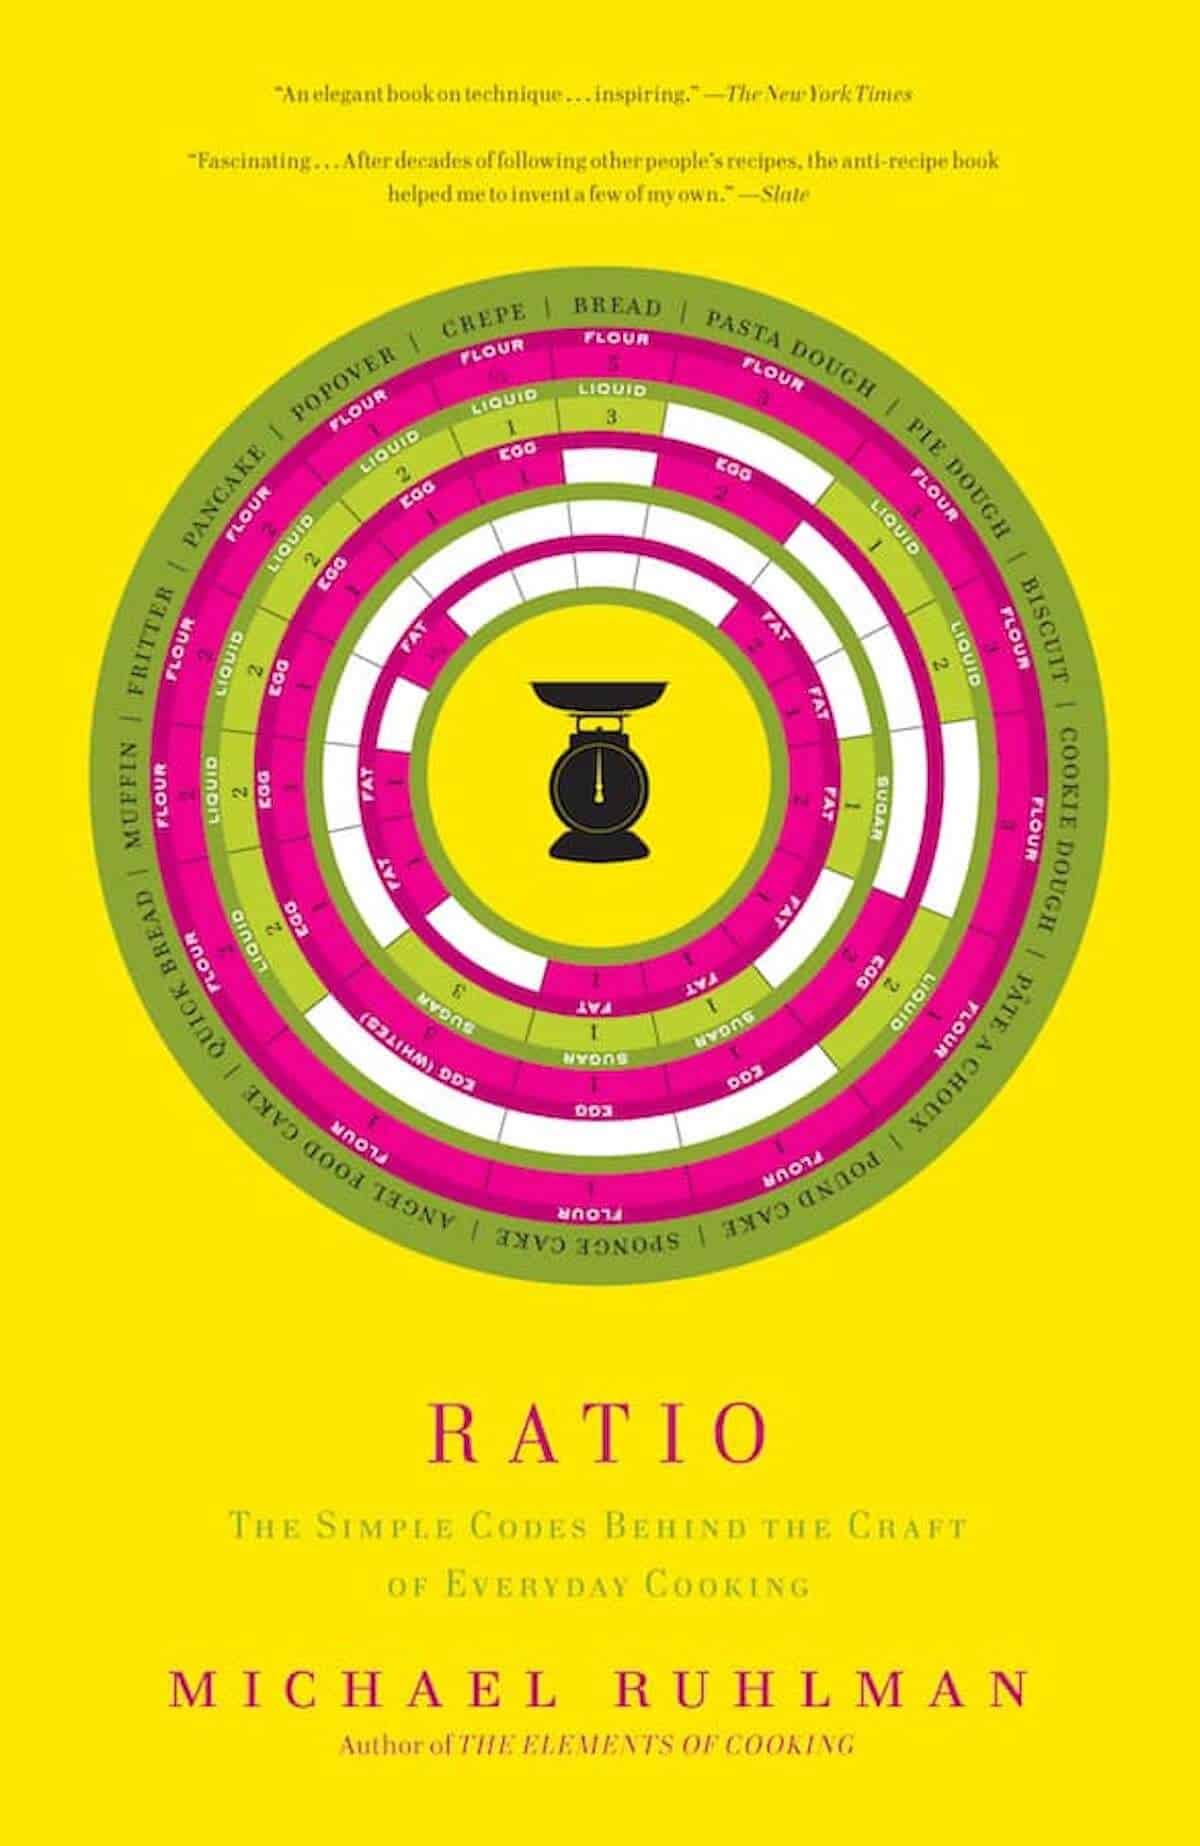 Michael Ruhlman's "Ratio" cookbook cover.